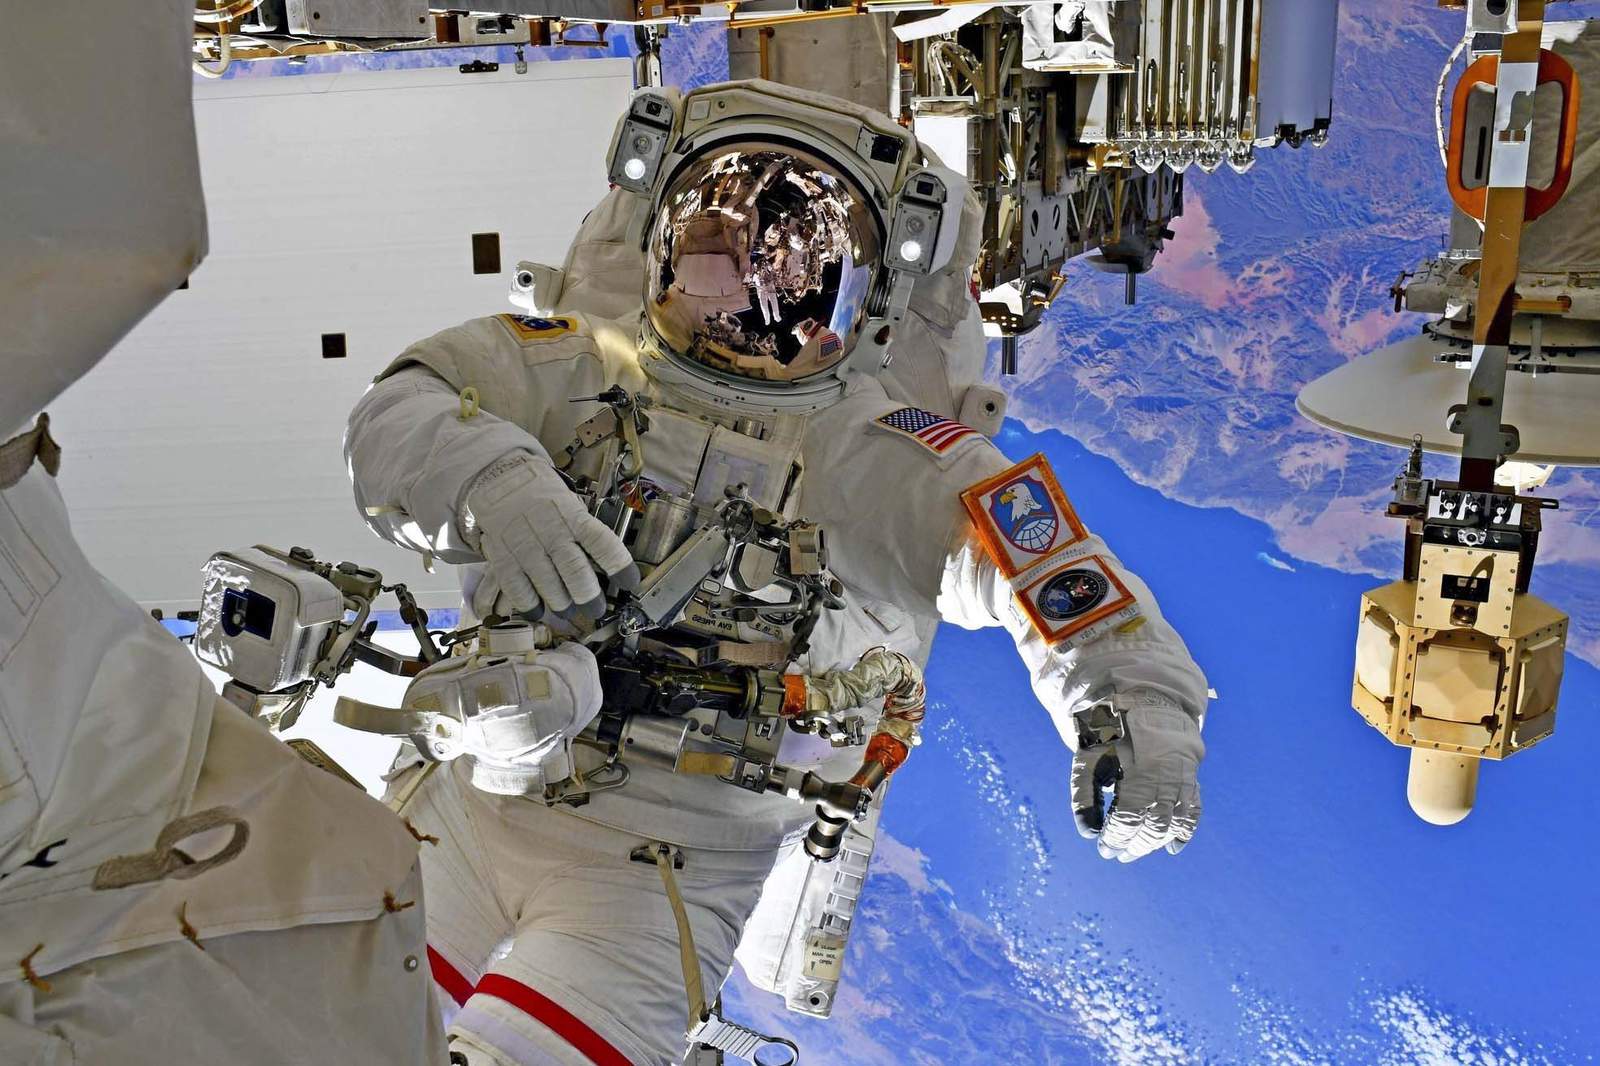 LIVE STREAM: Astronauts spacewalk outside ISS